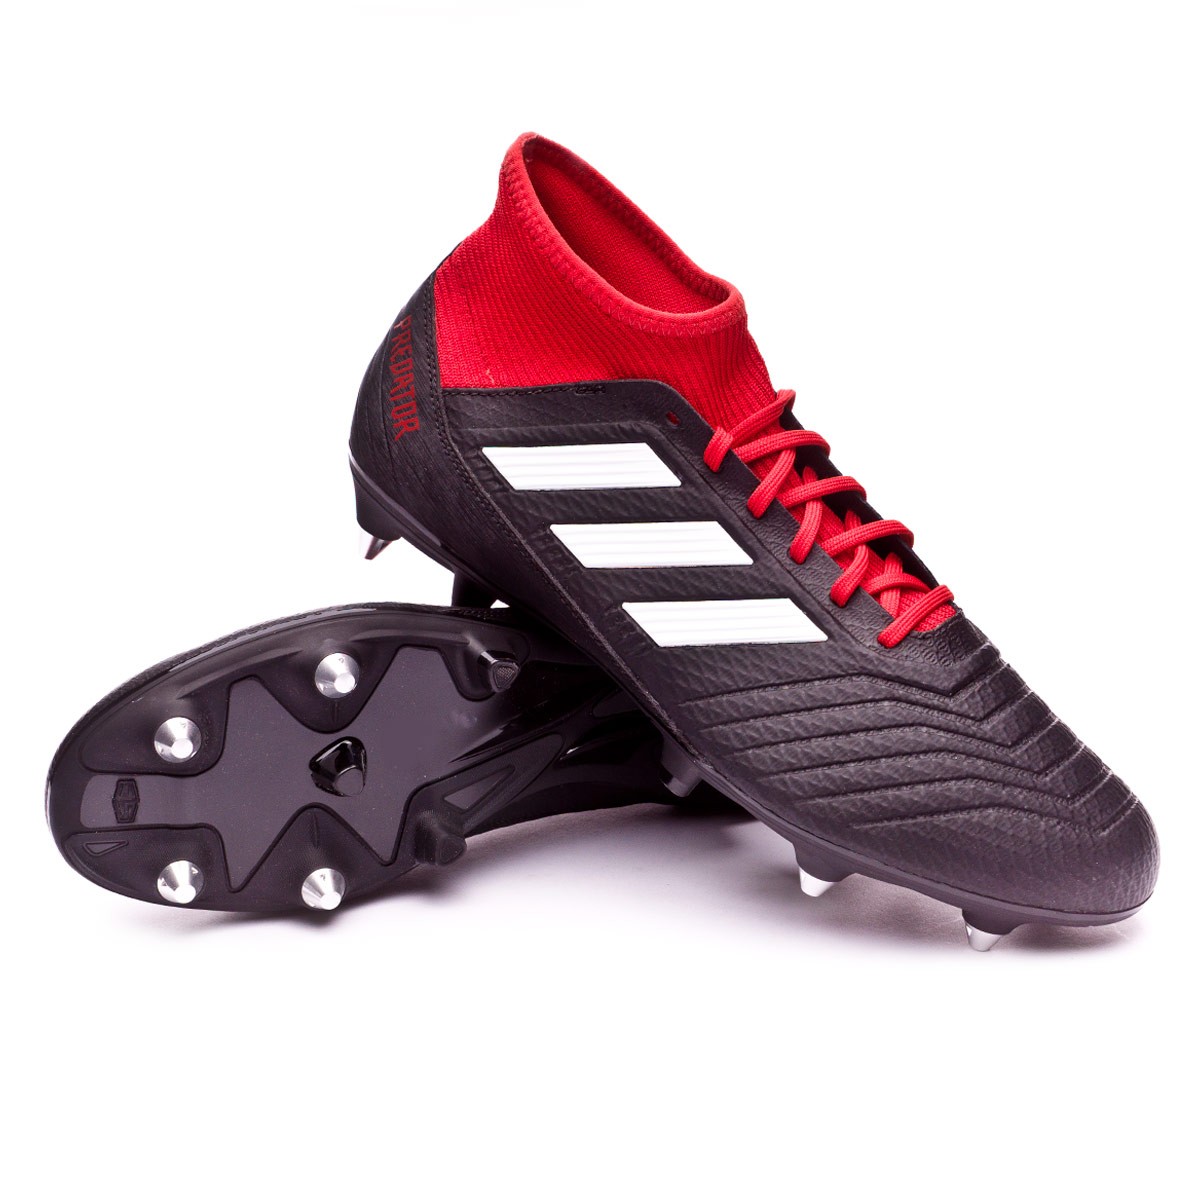 adidas predator 18.3 mens sg football boots